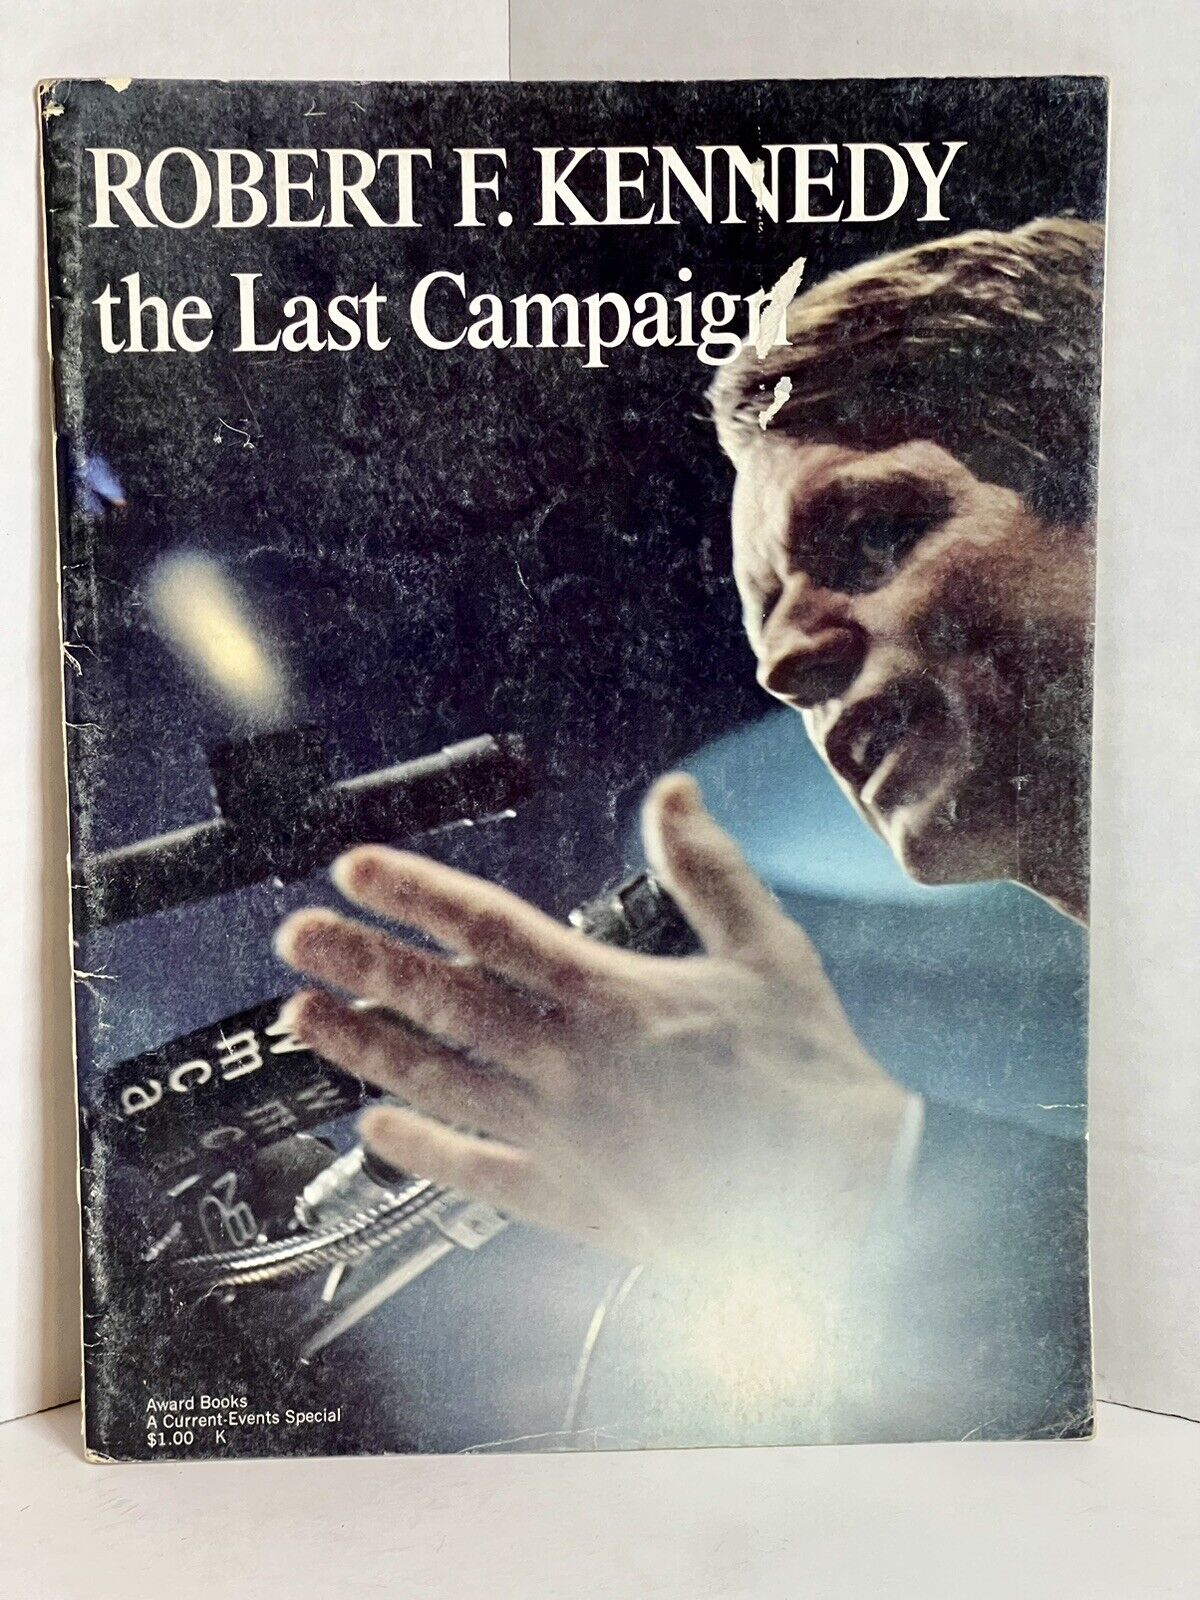 Robert F. Kennedy Memorial Magazine - the Last Campaign 1968